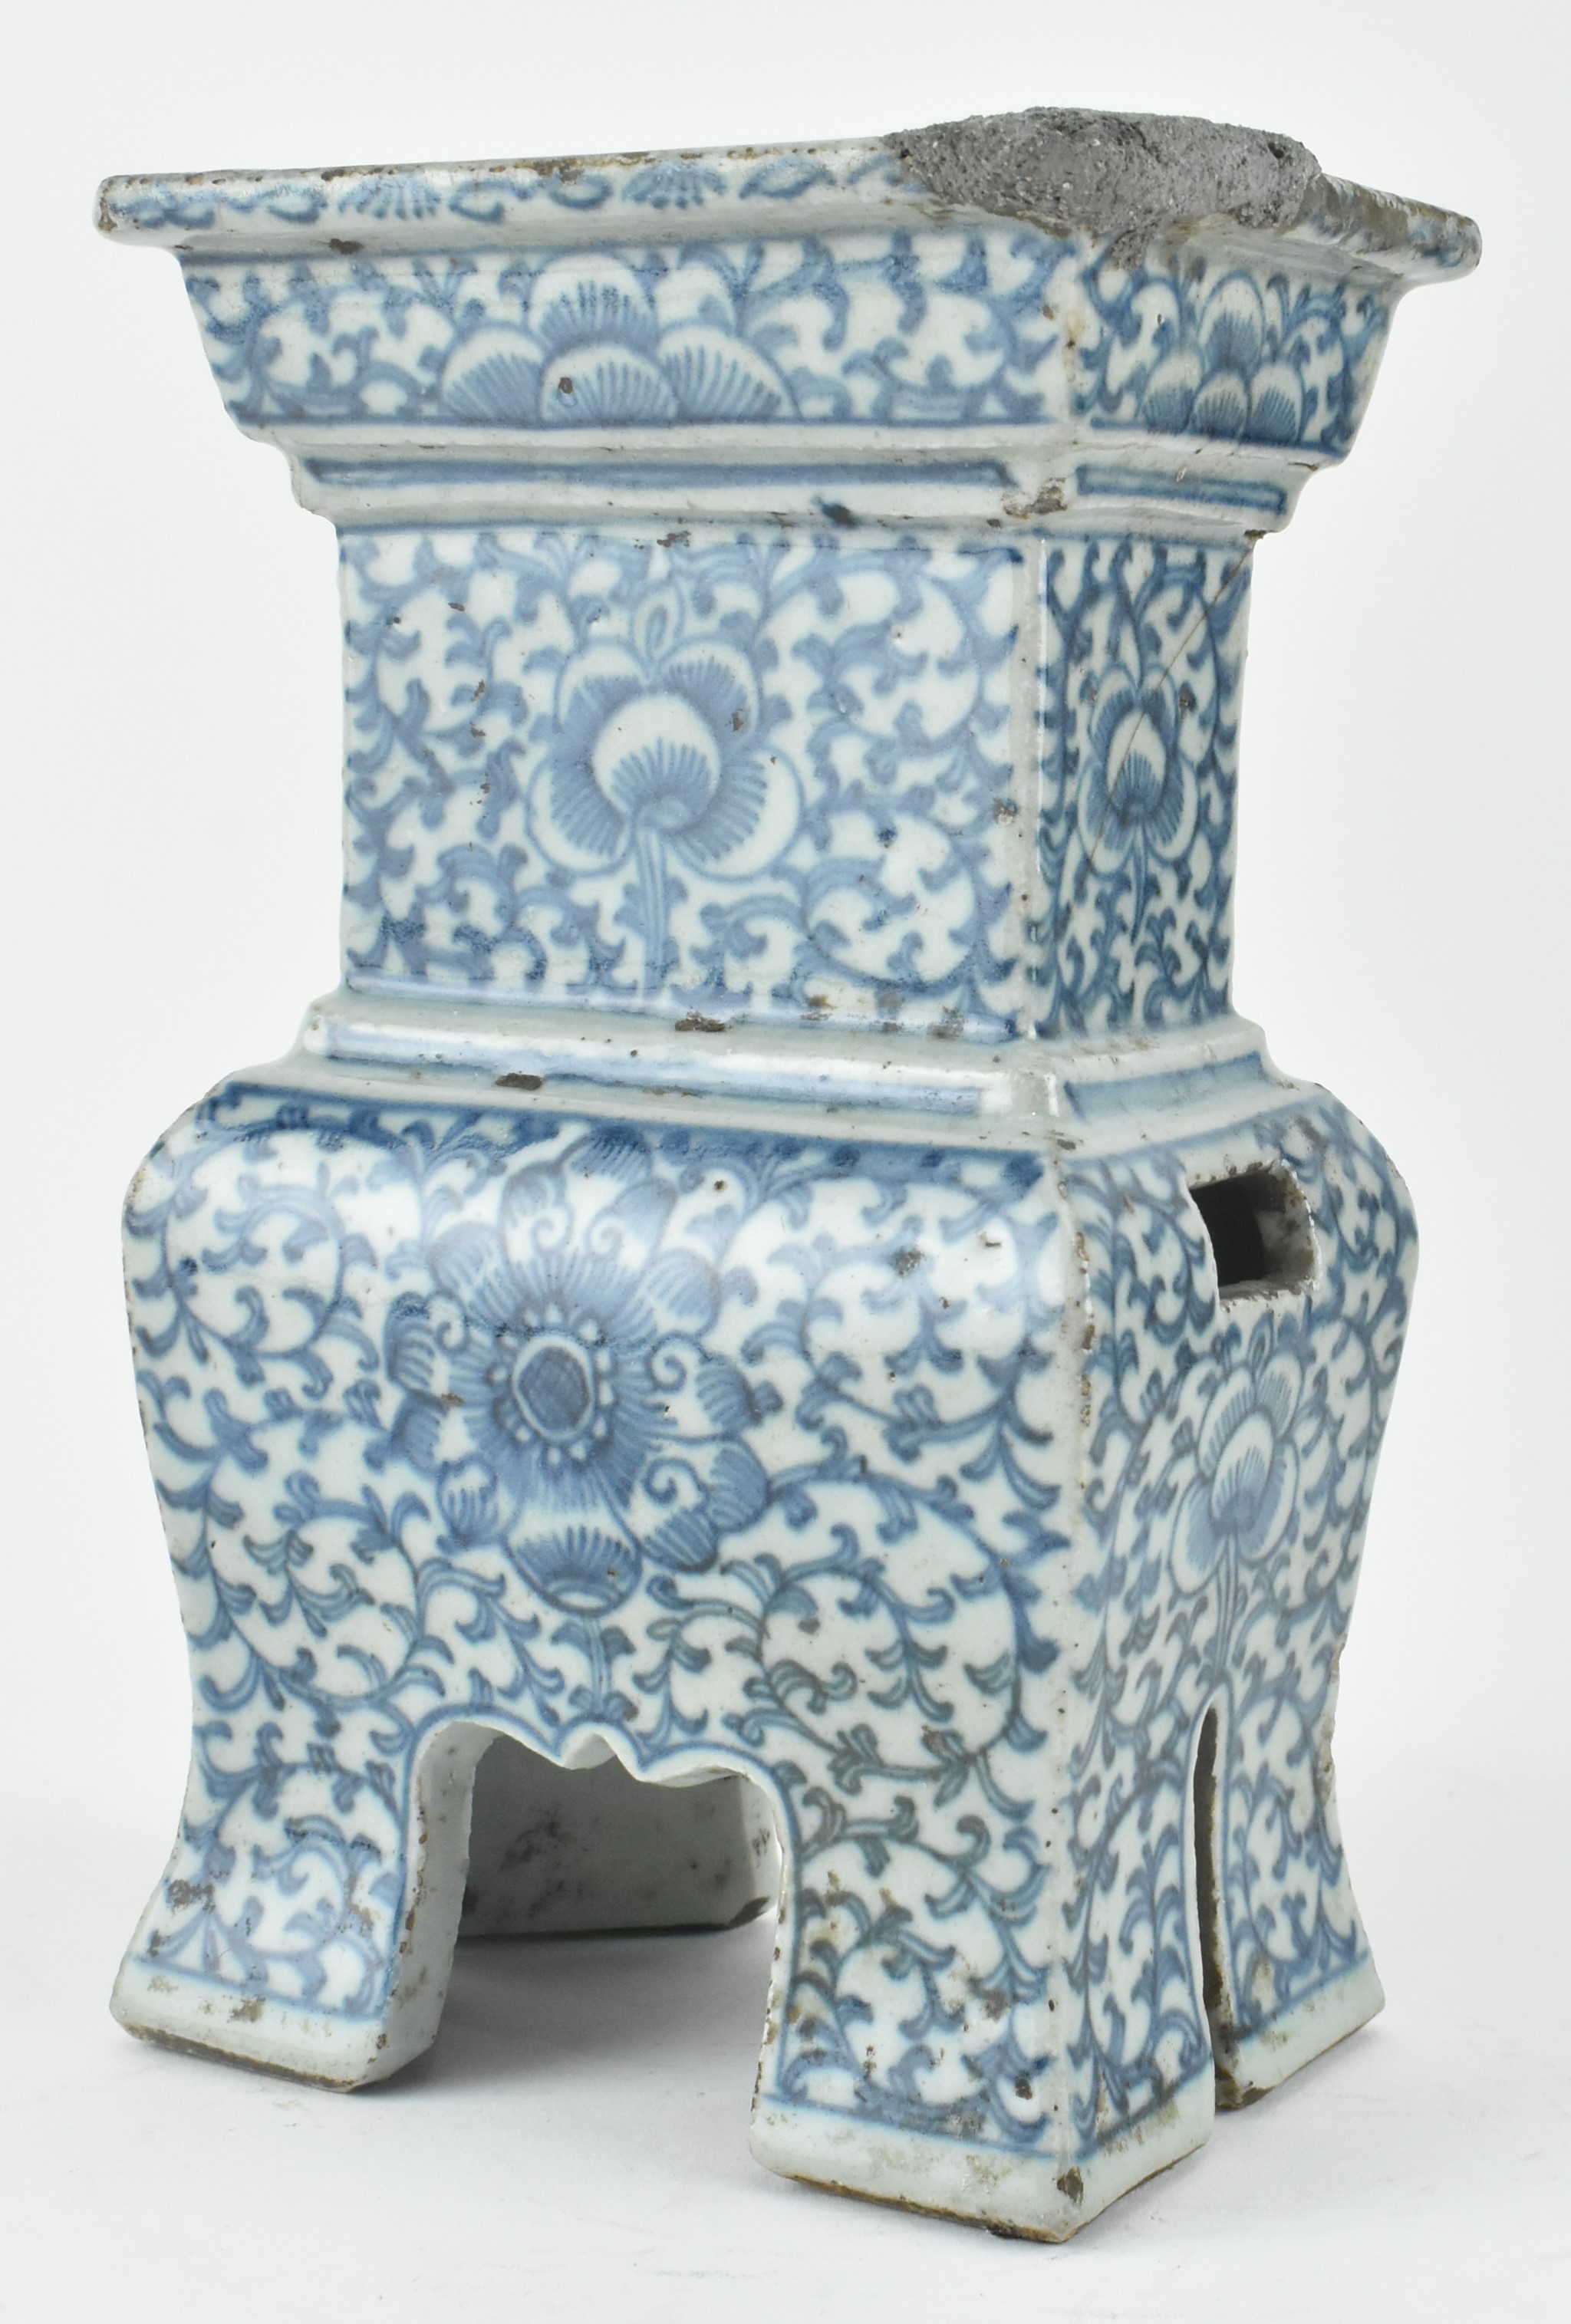 QING BLUE AND WHITE RECTANGULAR FOOTED CENSER 清 青花卷草纹香炉 - Image 2 of 6